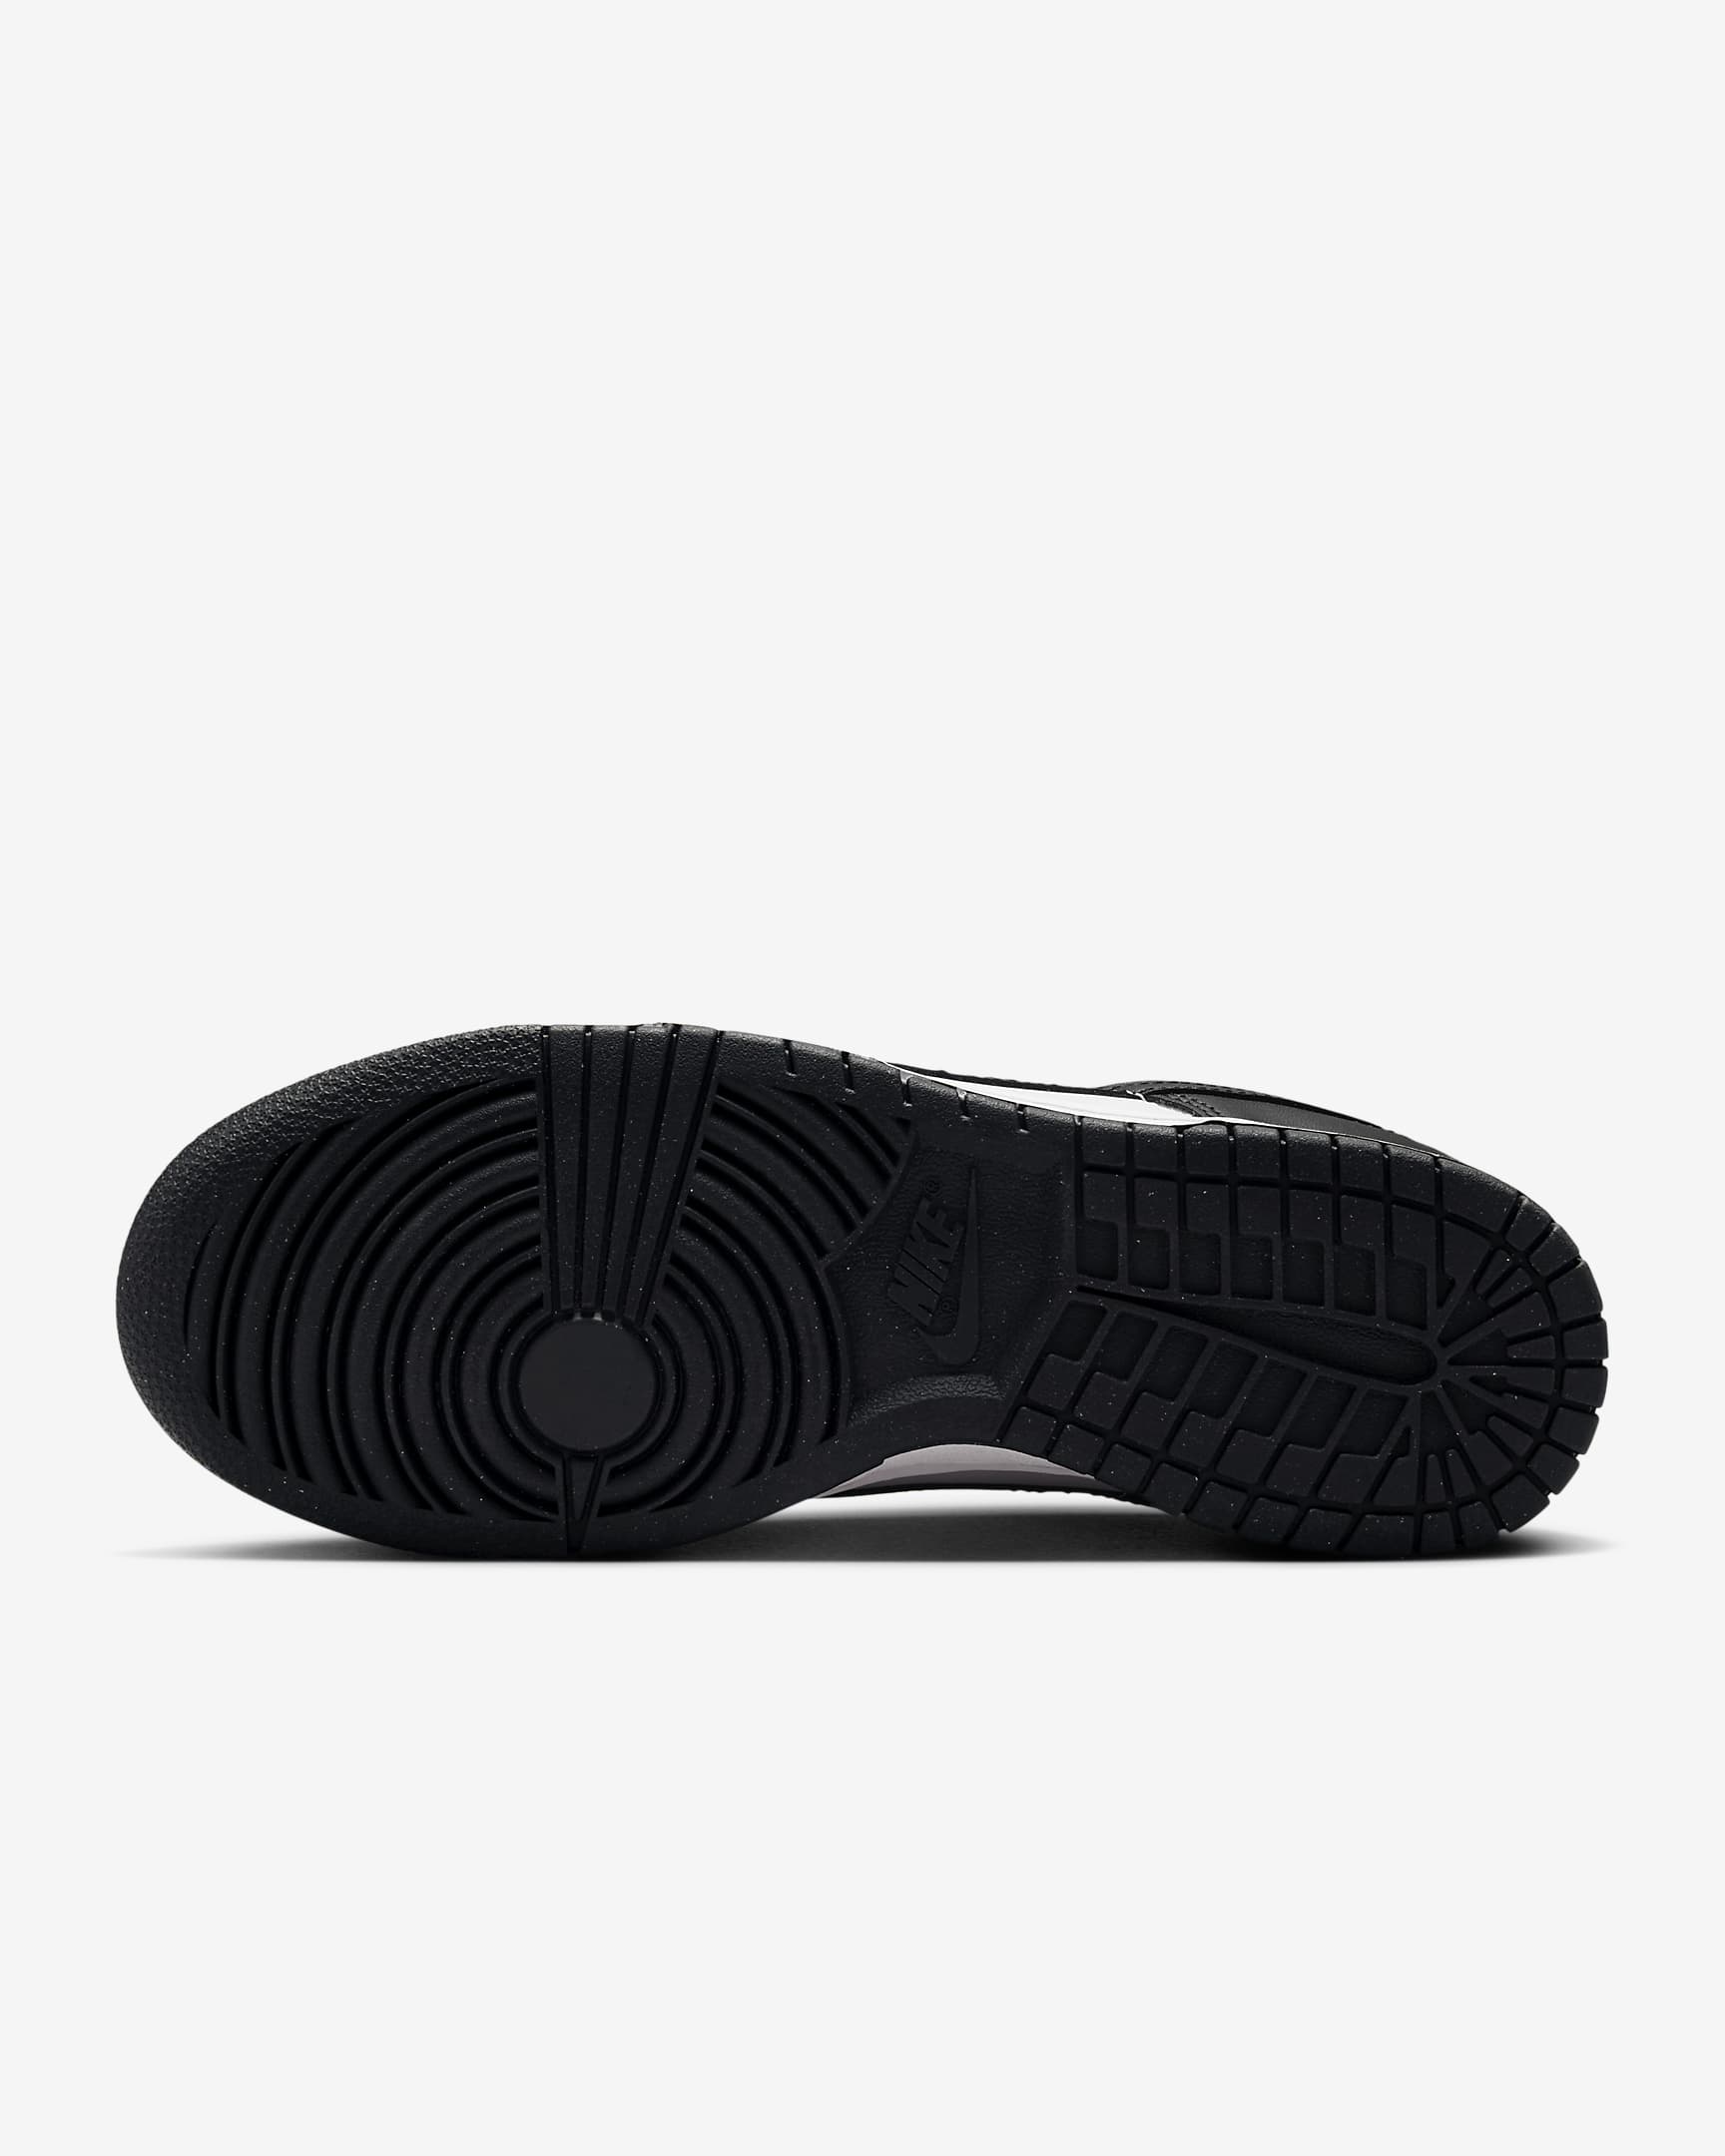 Nike Dunk Low Women's Shoes - White/Black